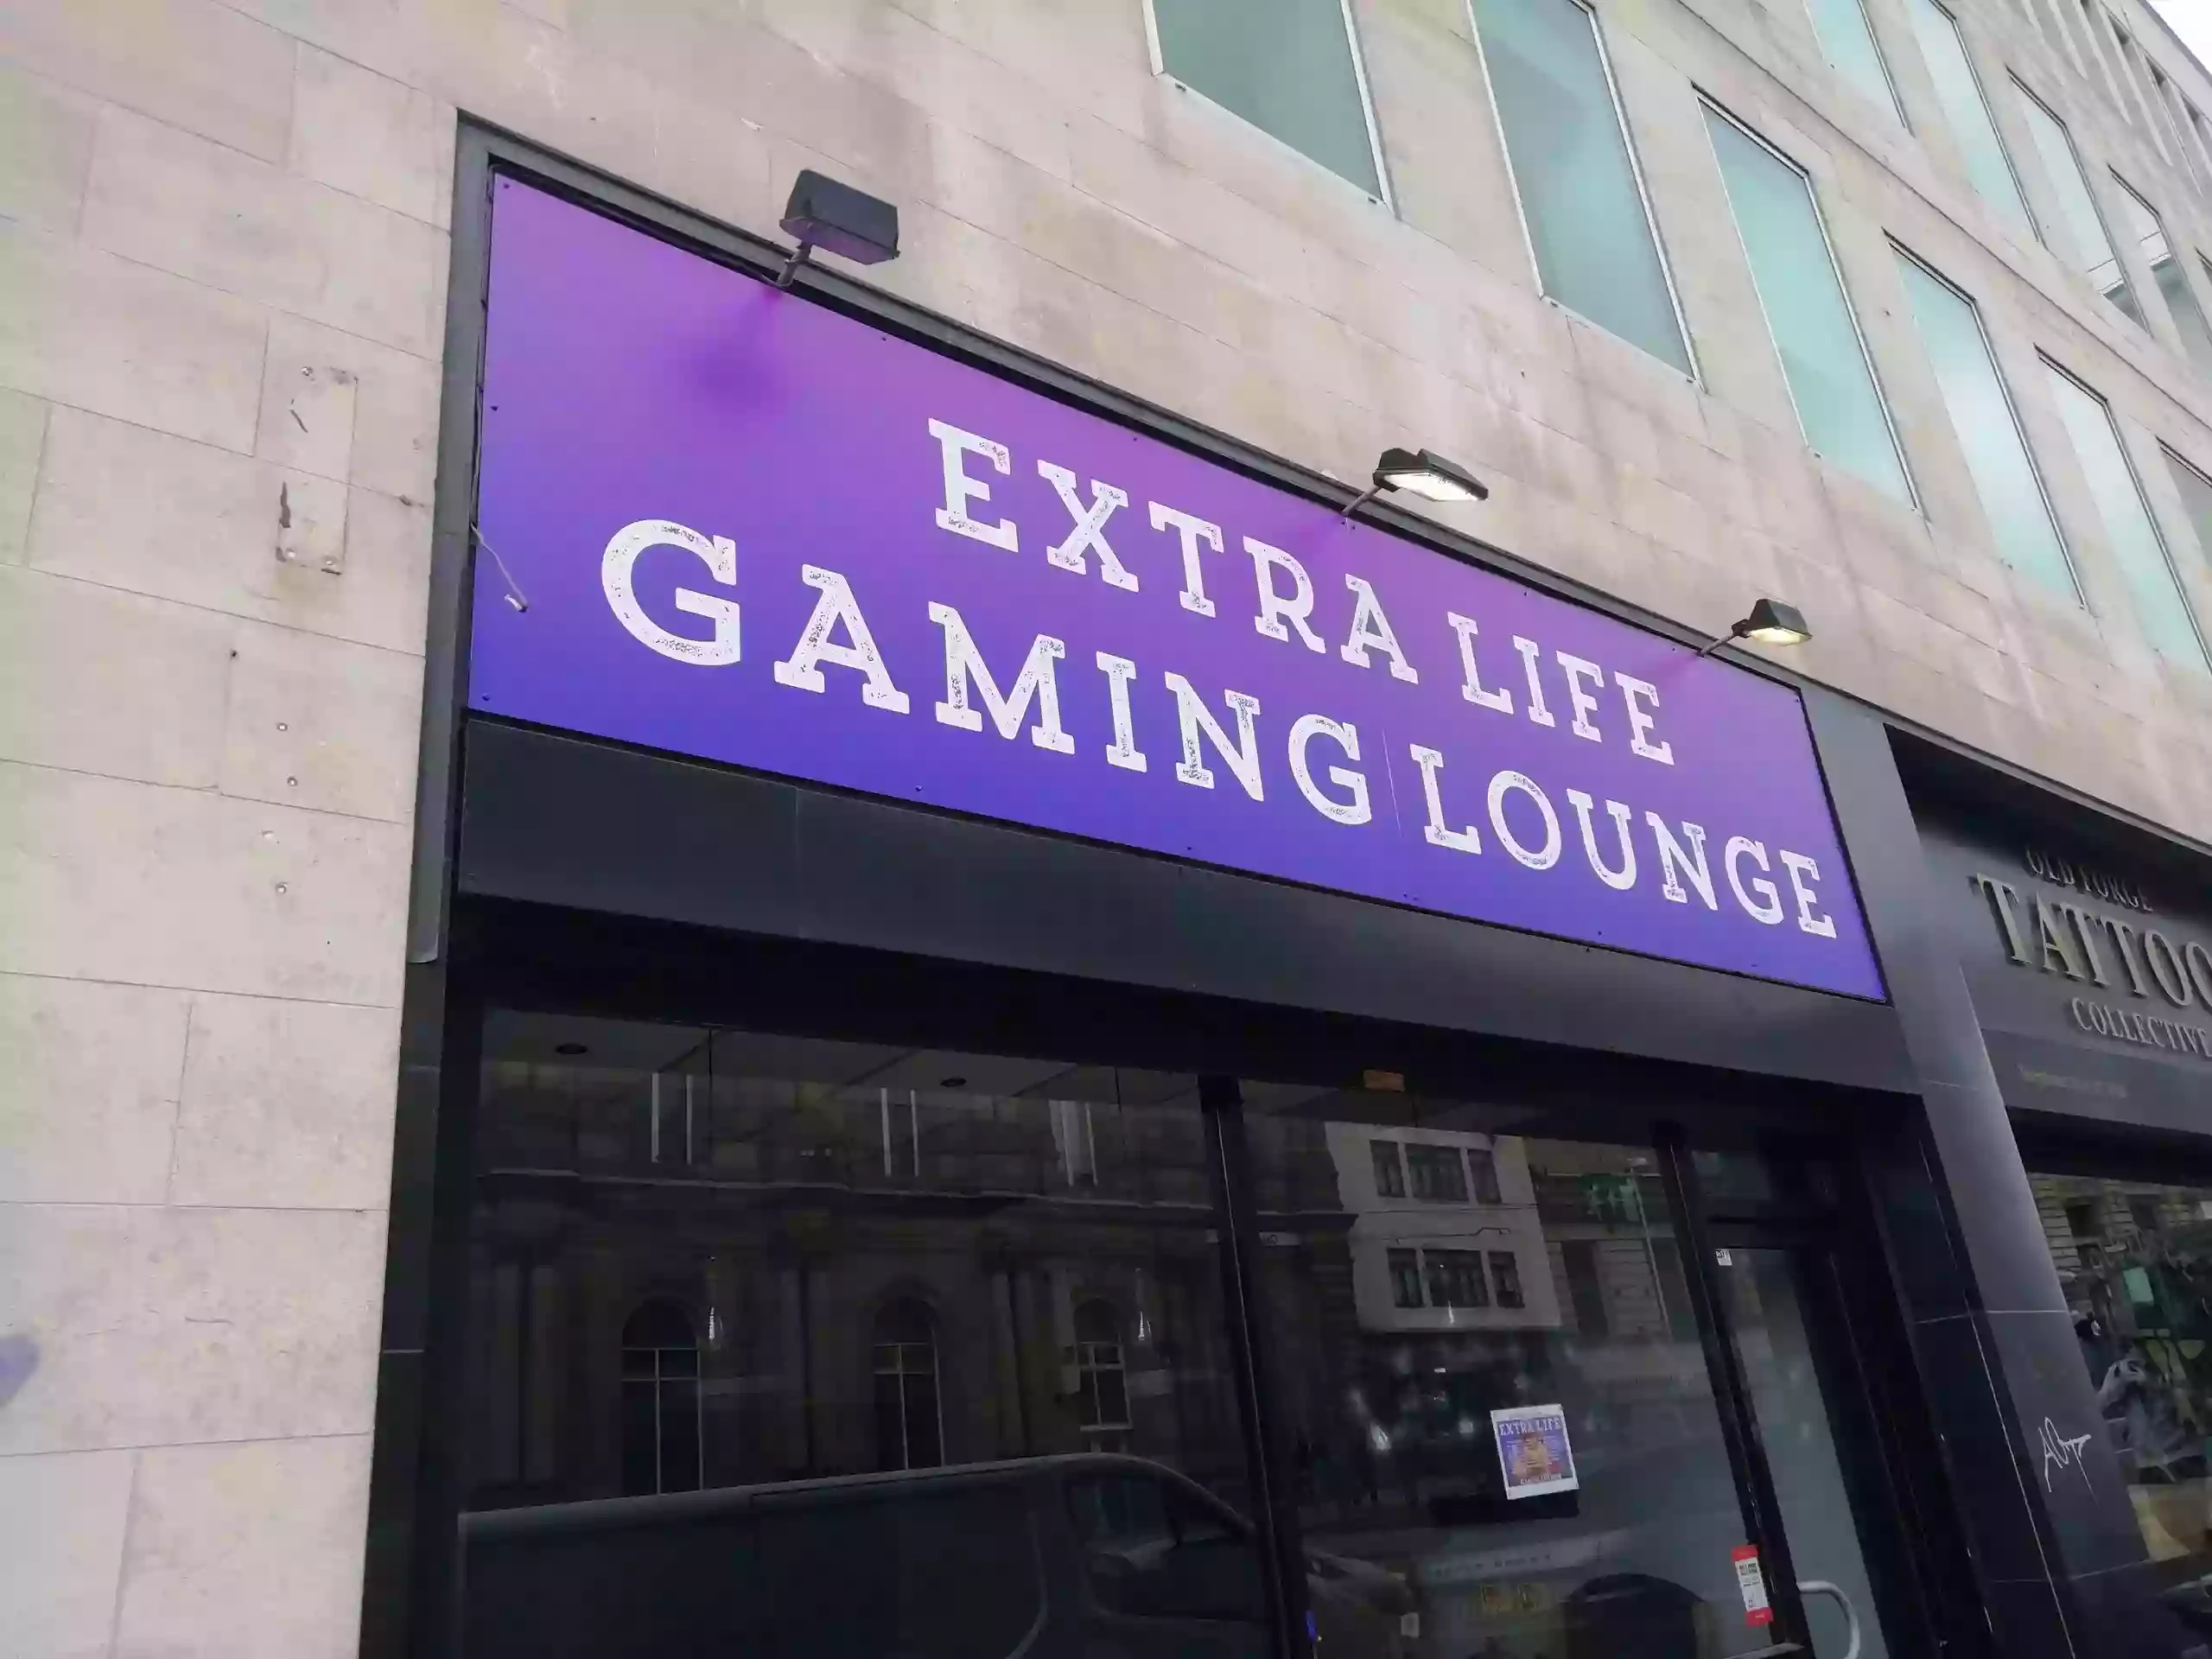 Extra Life Gaming Lounge